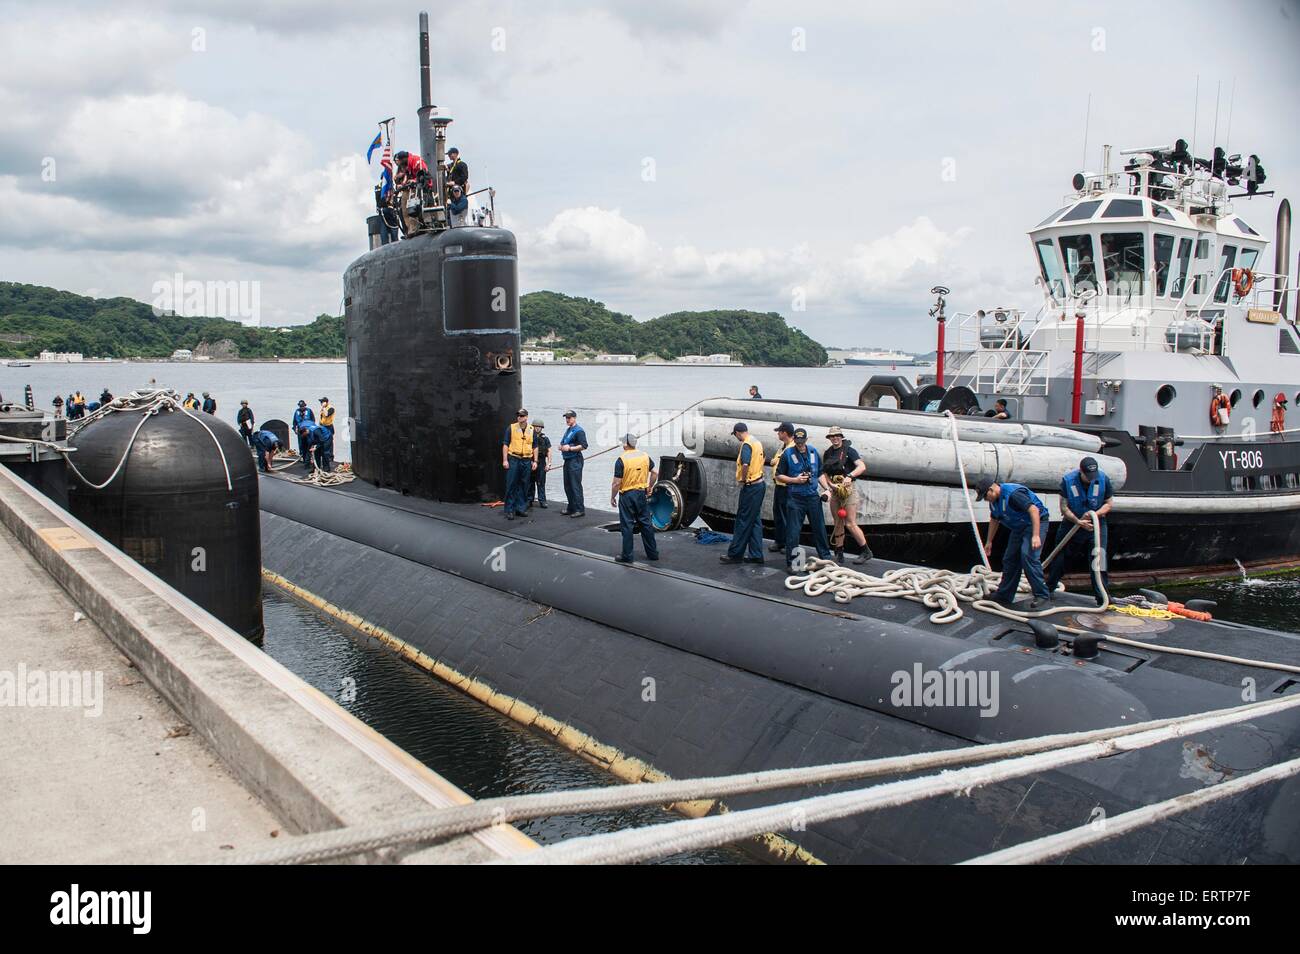 Uss hampton submarine hi-res stock photography and images - Alamy